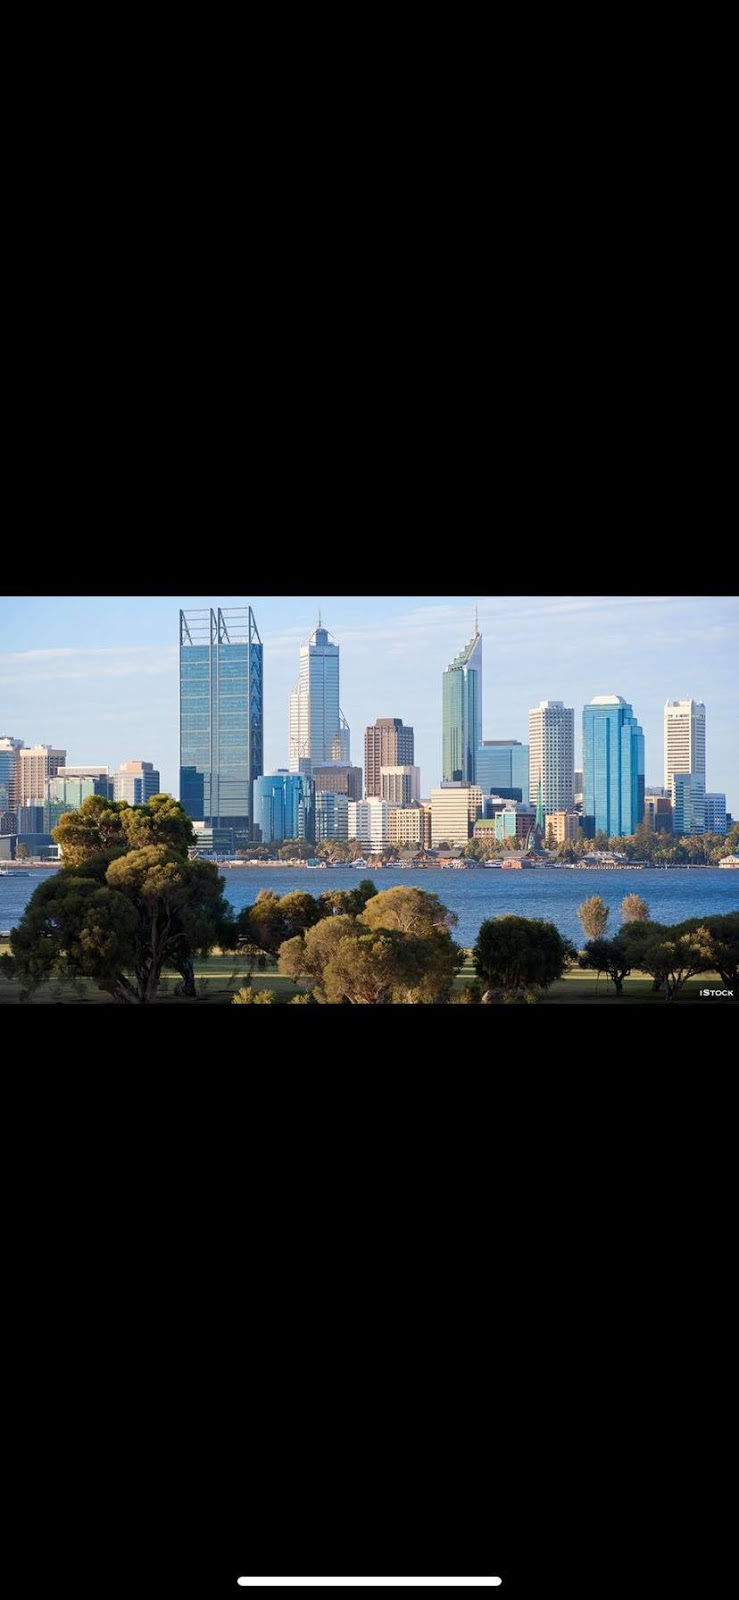 Economic Removal Services Perth | 31 Gemini Way, Madeley WA 6065, Australia | Phone: 0488 022 387